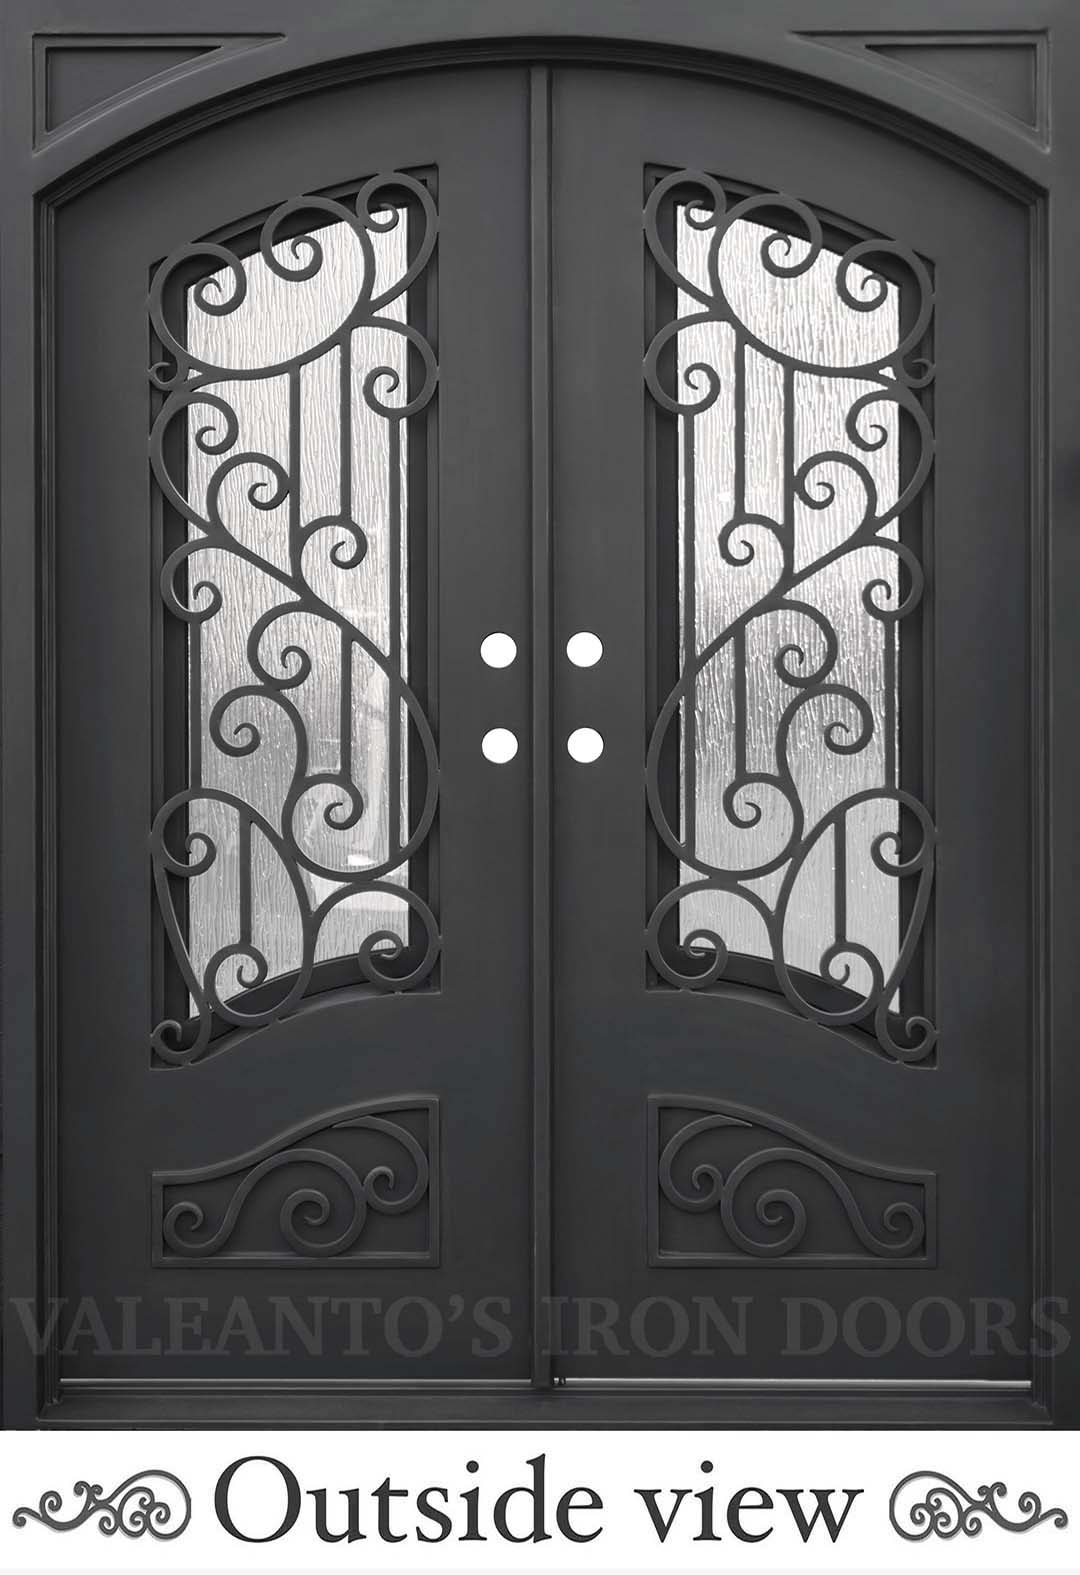 Valeanto's Wrought Iron Entry Door 238 | Valeanto's Iron Door